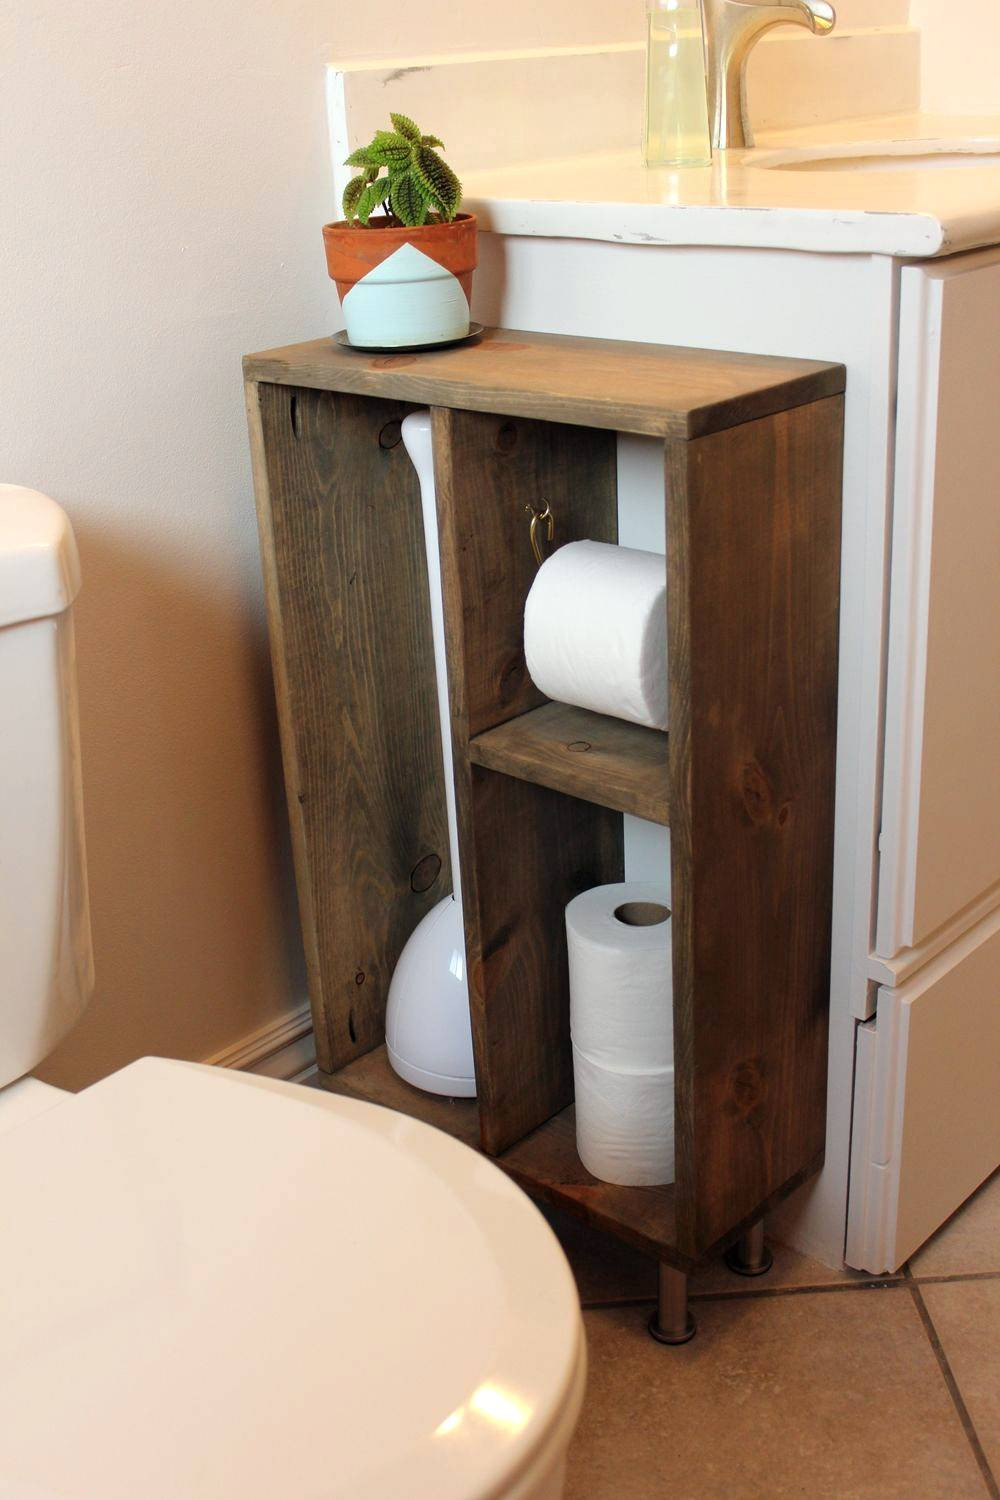 Bathroom Cabinet Organizer Ideas
 Boosting Your Bathroom Storage Capacity with DIY Shelving